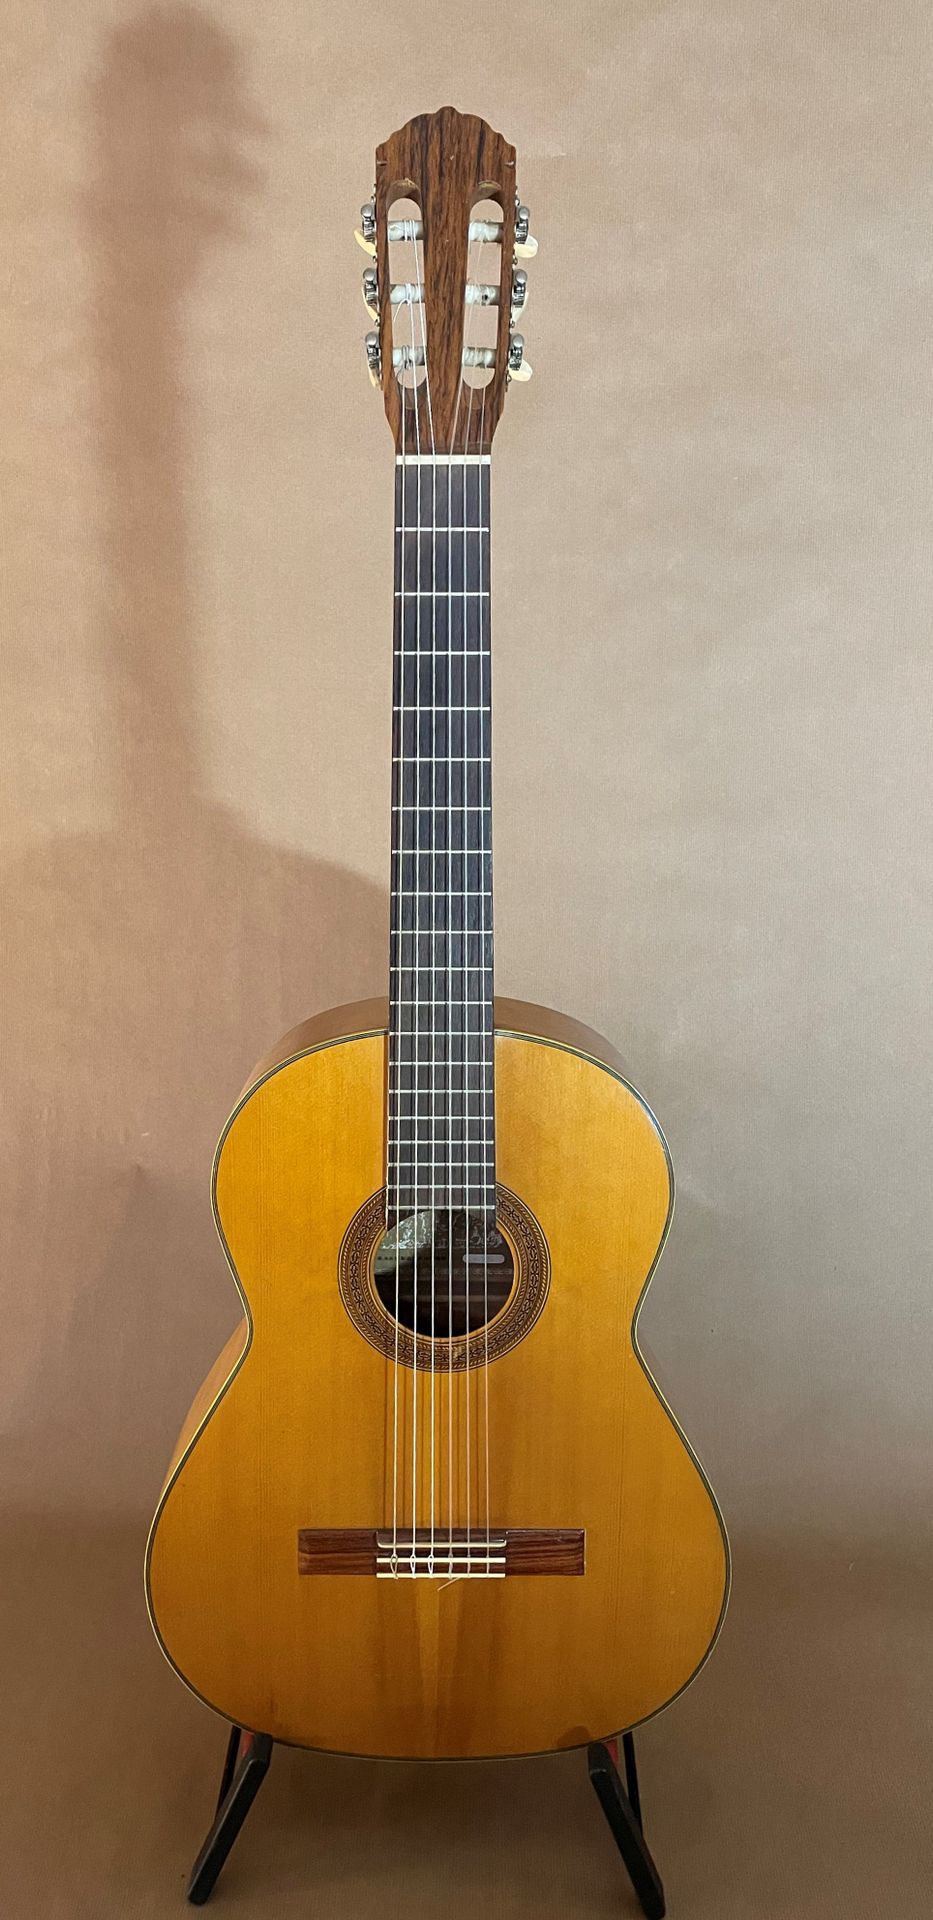 Null 美丽的匿名学生吉他，日本 C.1980

弦长648mm 弦枕间距50mm

杉木面板。枫木背板和侧板

使用过的痕迹，随时可以播放